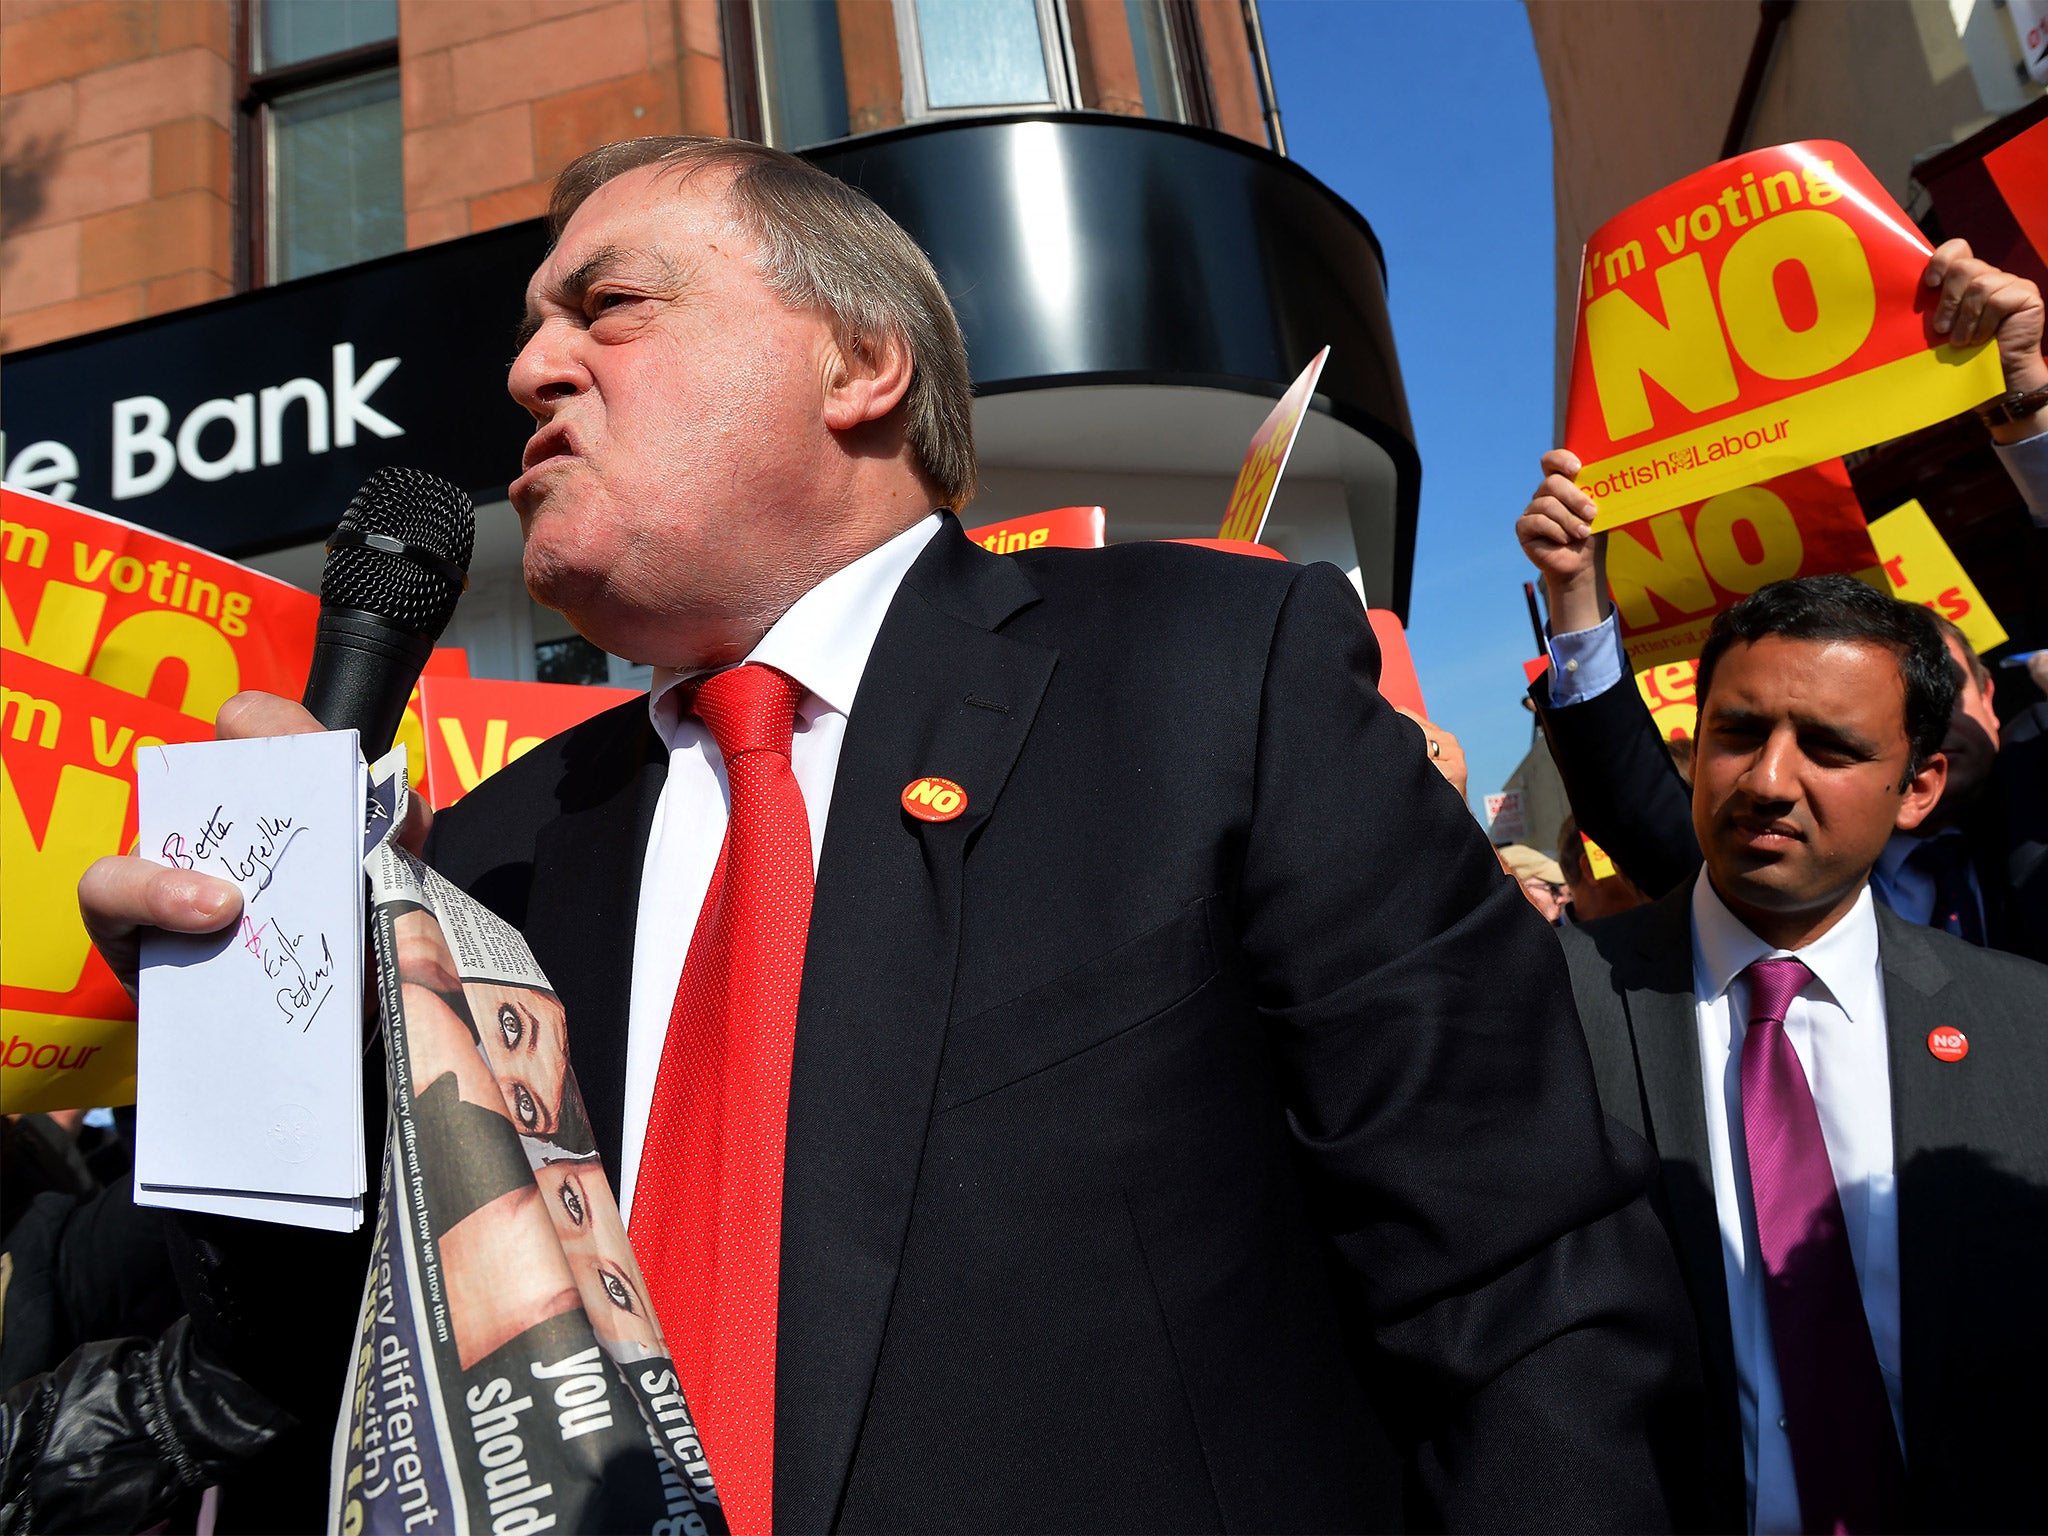 John Prescott campaigns for a 'No' vote in the referendum on Rutherglen main street in Glasgow